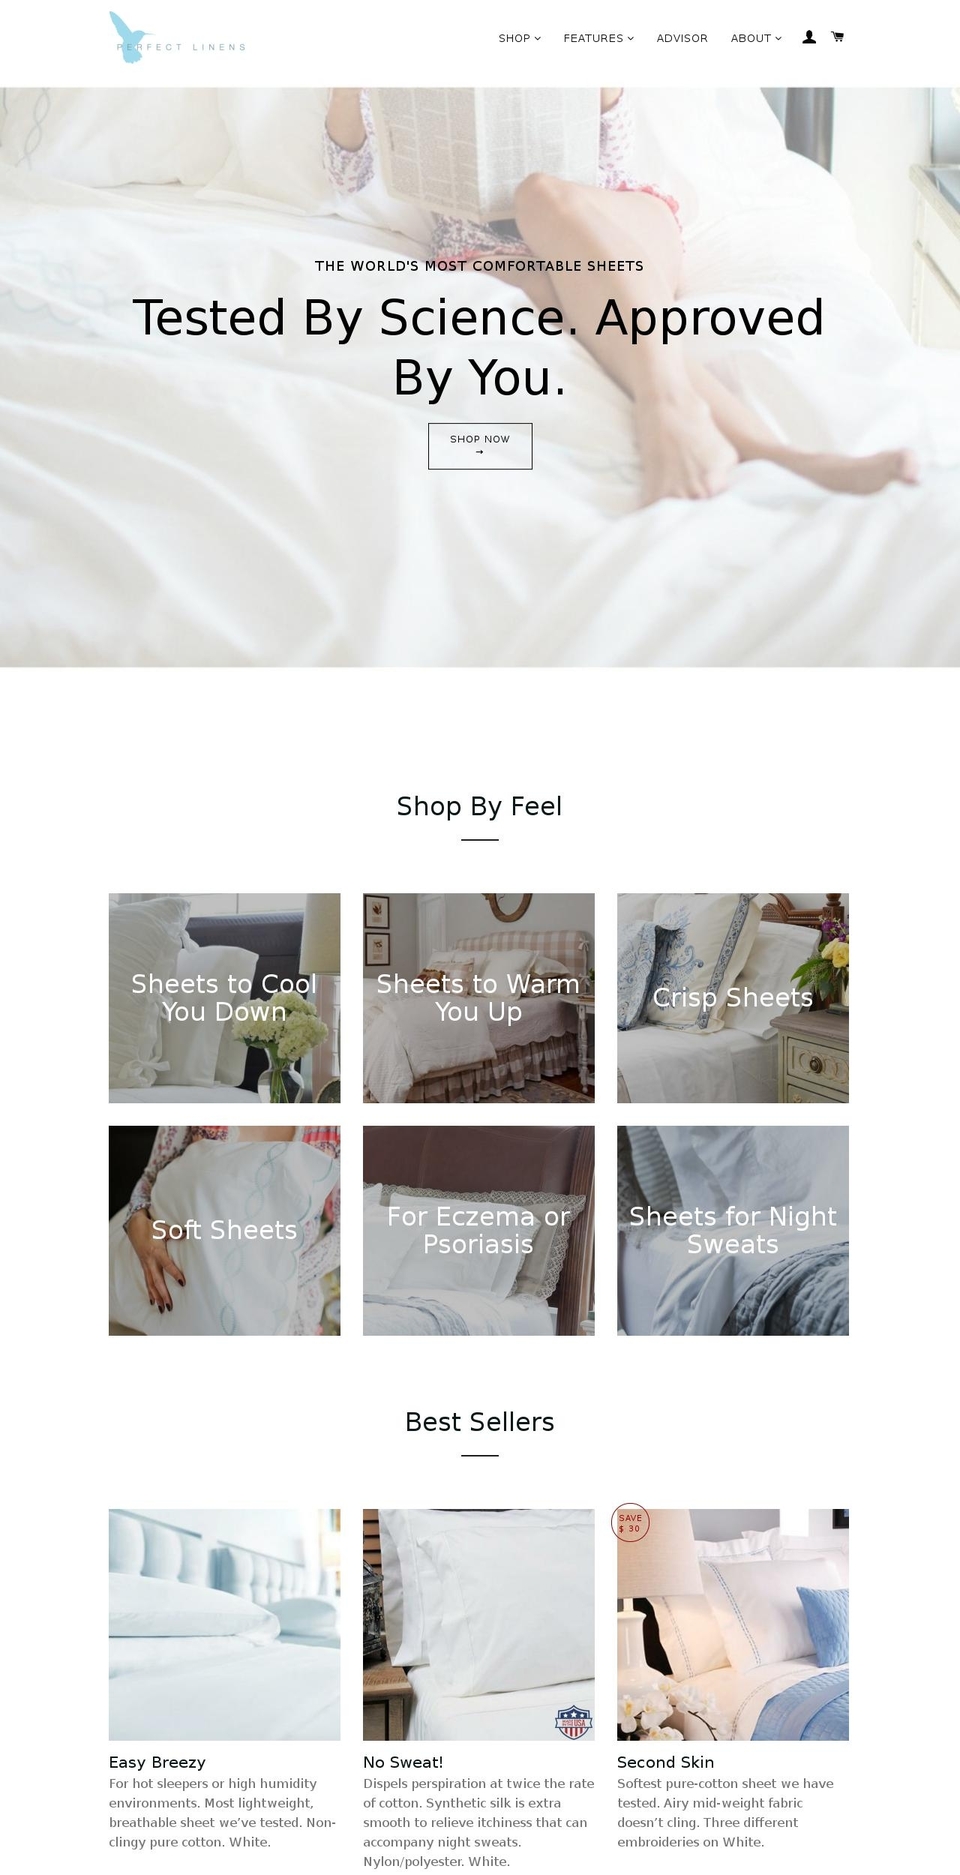 perfectlinens.com shopify website screenshot